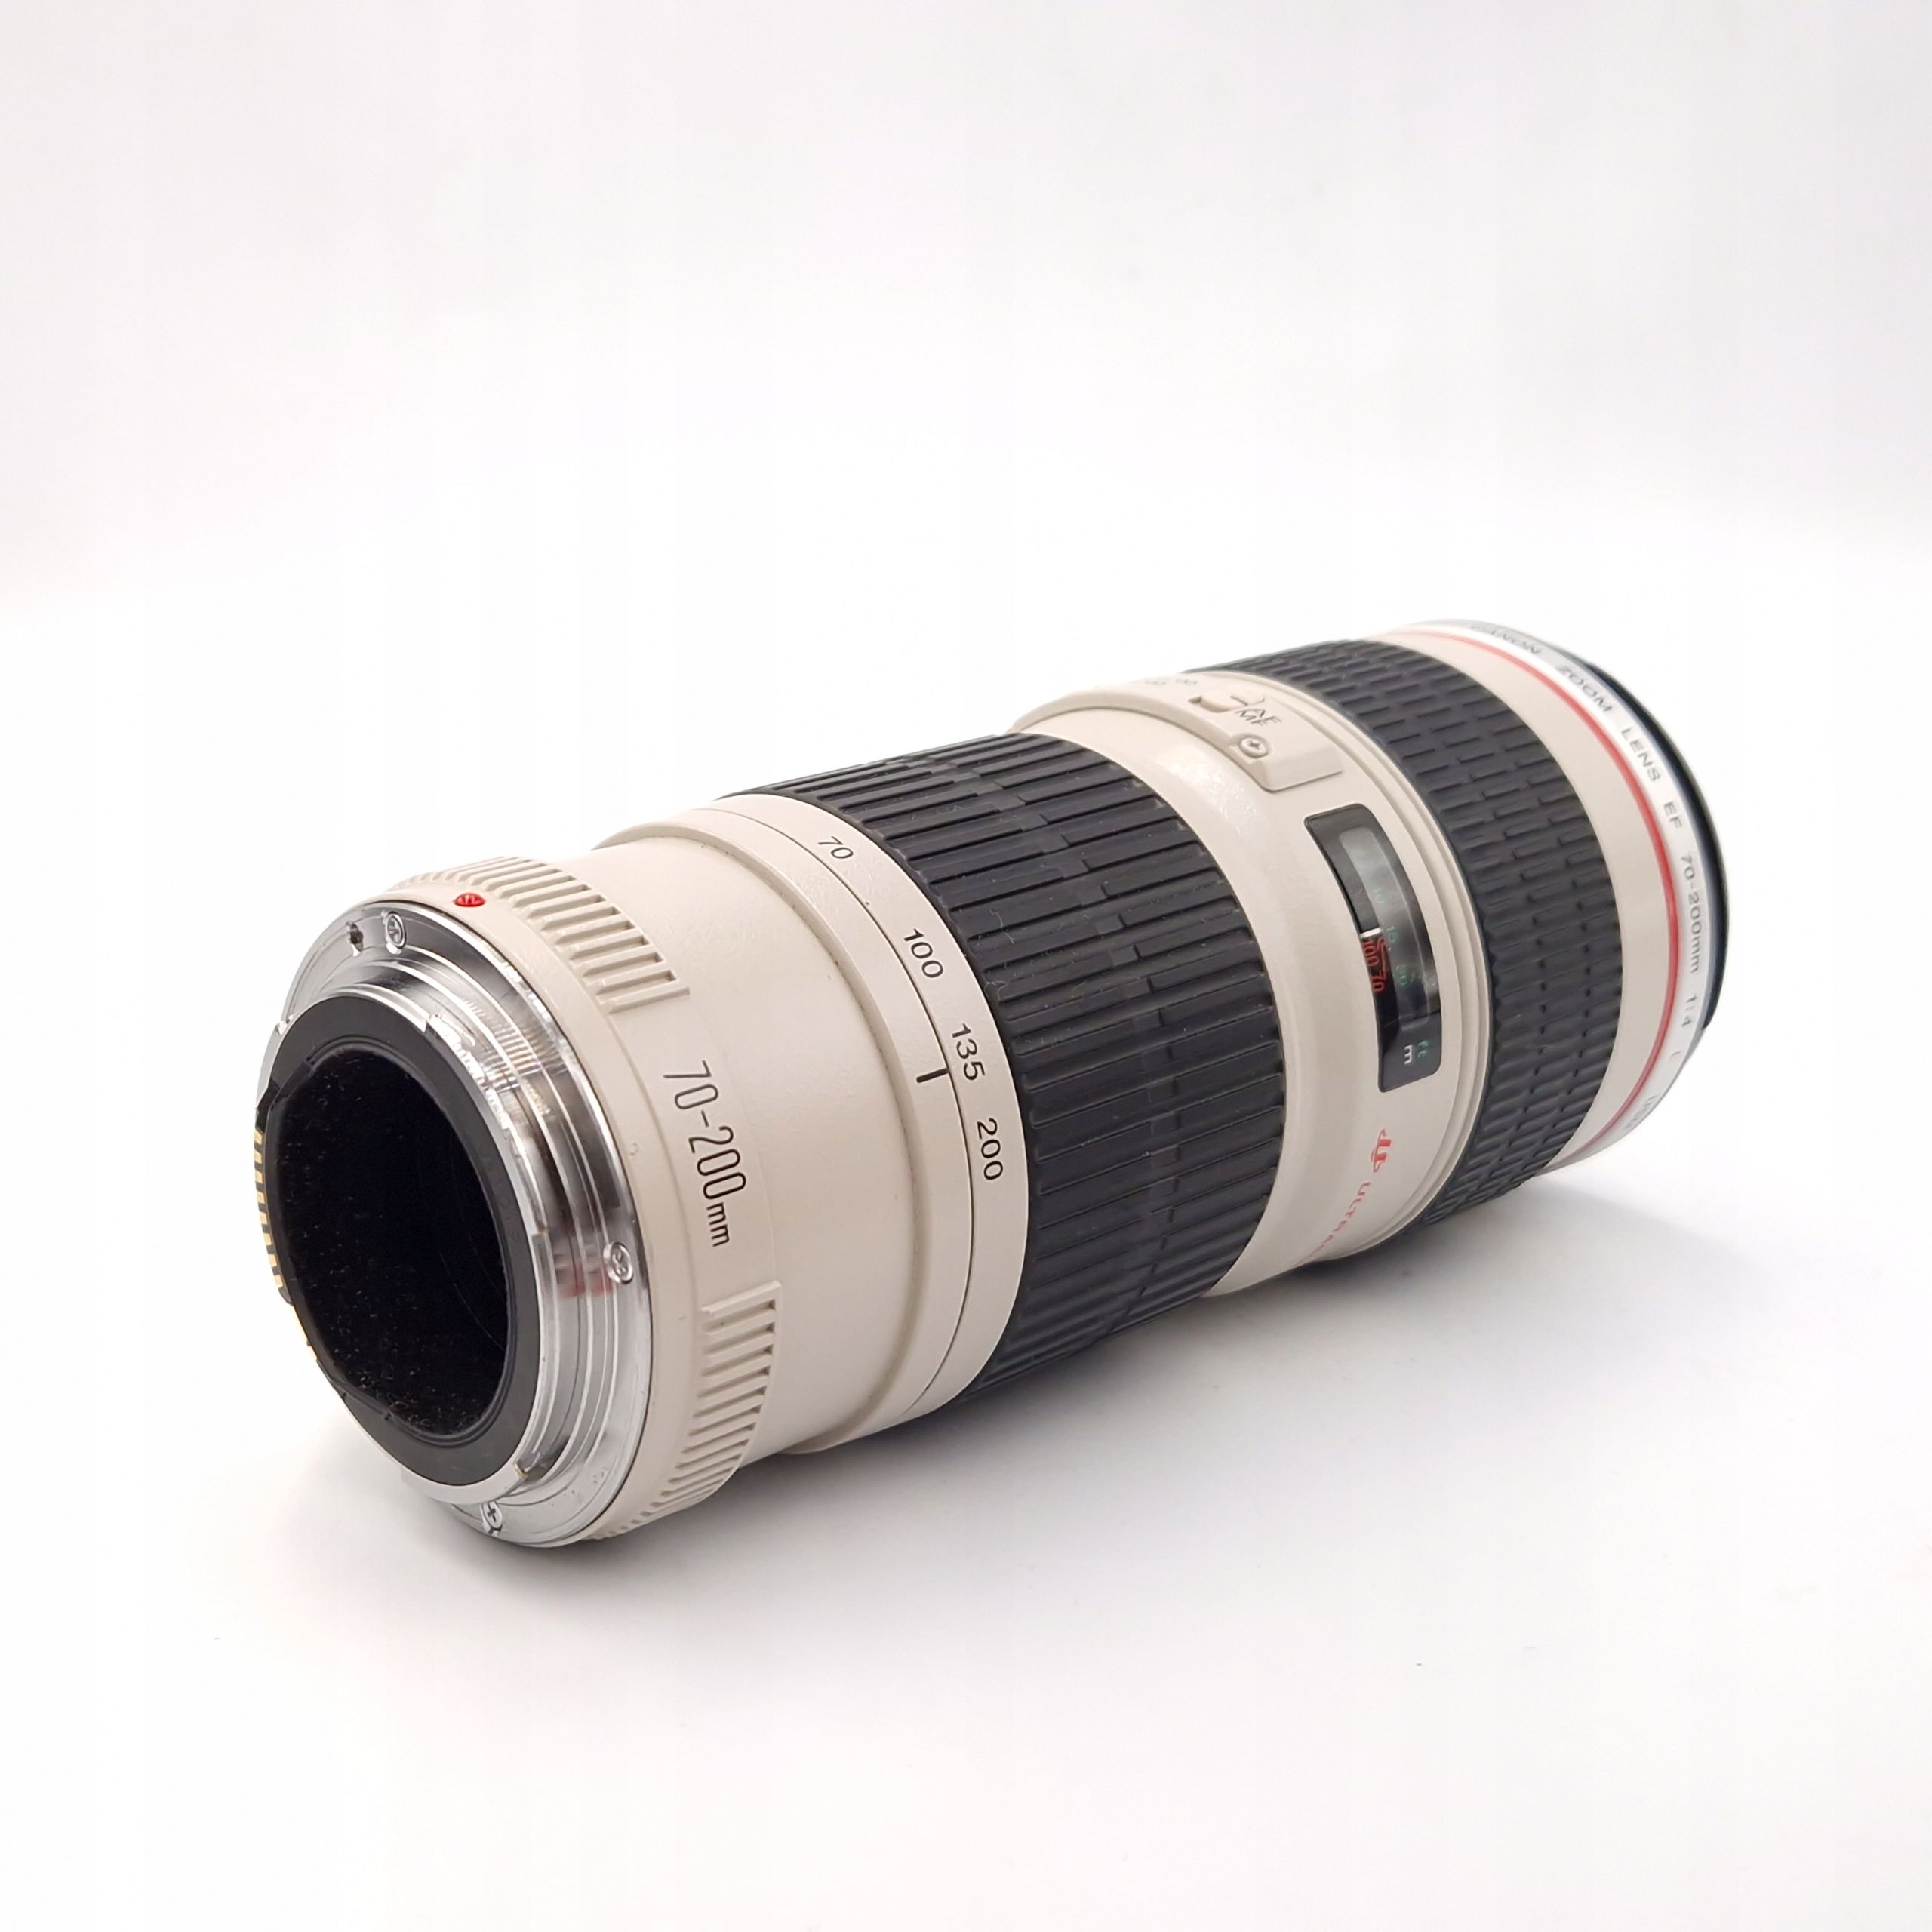 Obiektyw Canon Ef 70-200mm f/4 L Mega Ostry Stan Zadbany egzemplarz